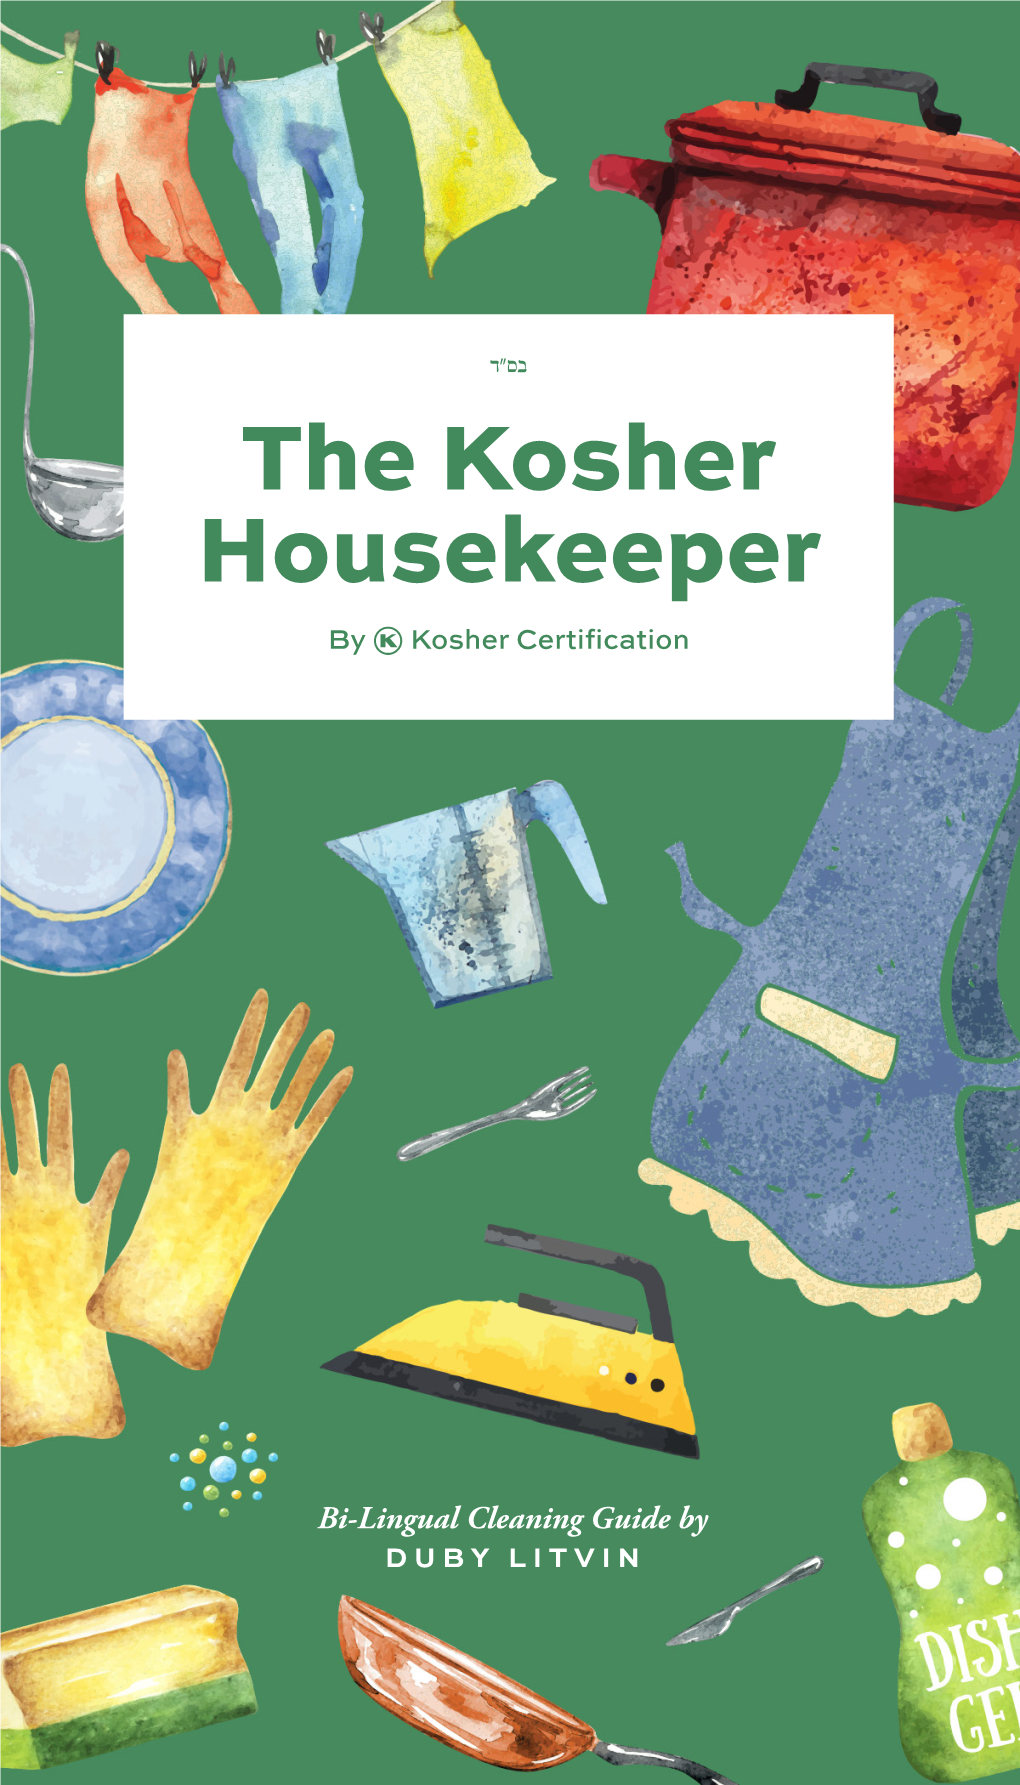 The Kosher Housekeeper by ~ Kosher Certification